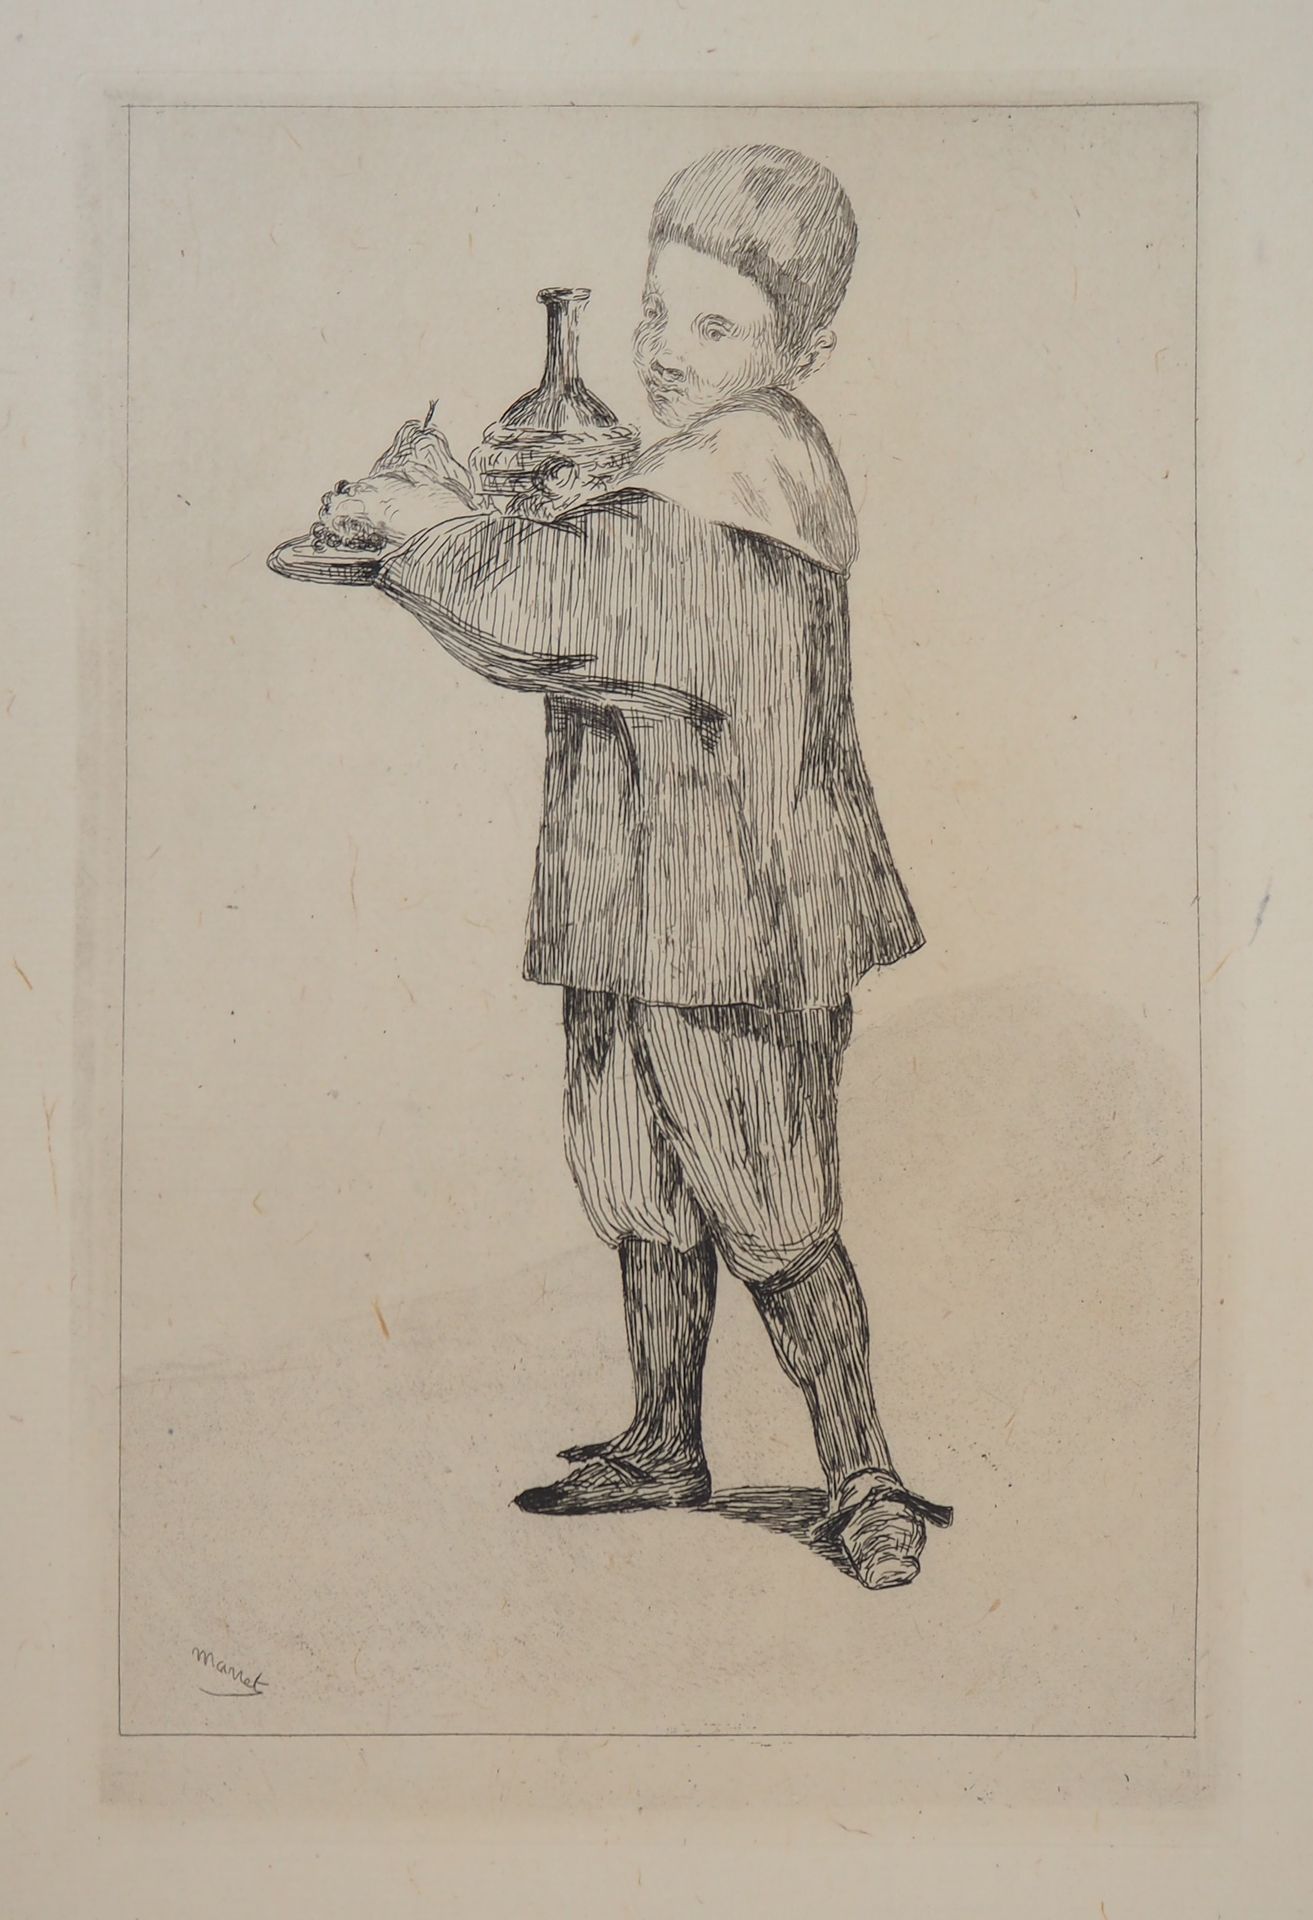 Edouard MANET 爱德华-曼尼特

端着托盘的儿童，1861年

原始雕刻（蚀刻）。

板块中的签名

在Japon纸上，36 x 24厘米

参考资&hellip;